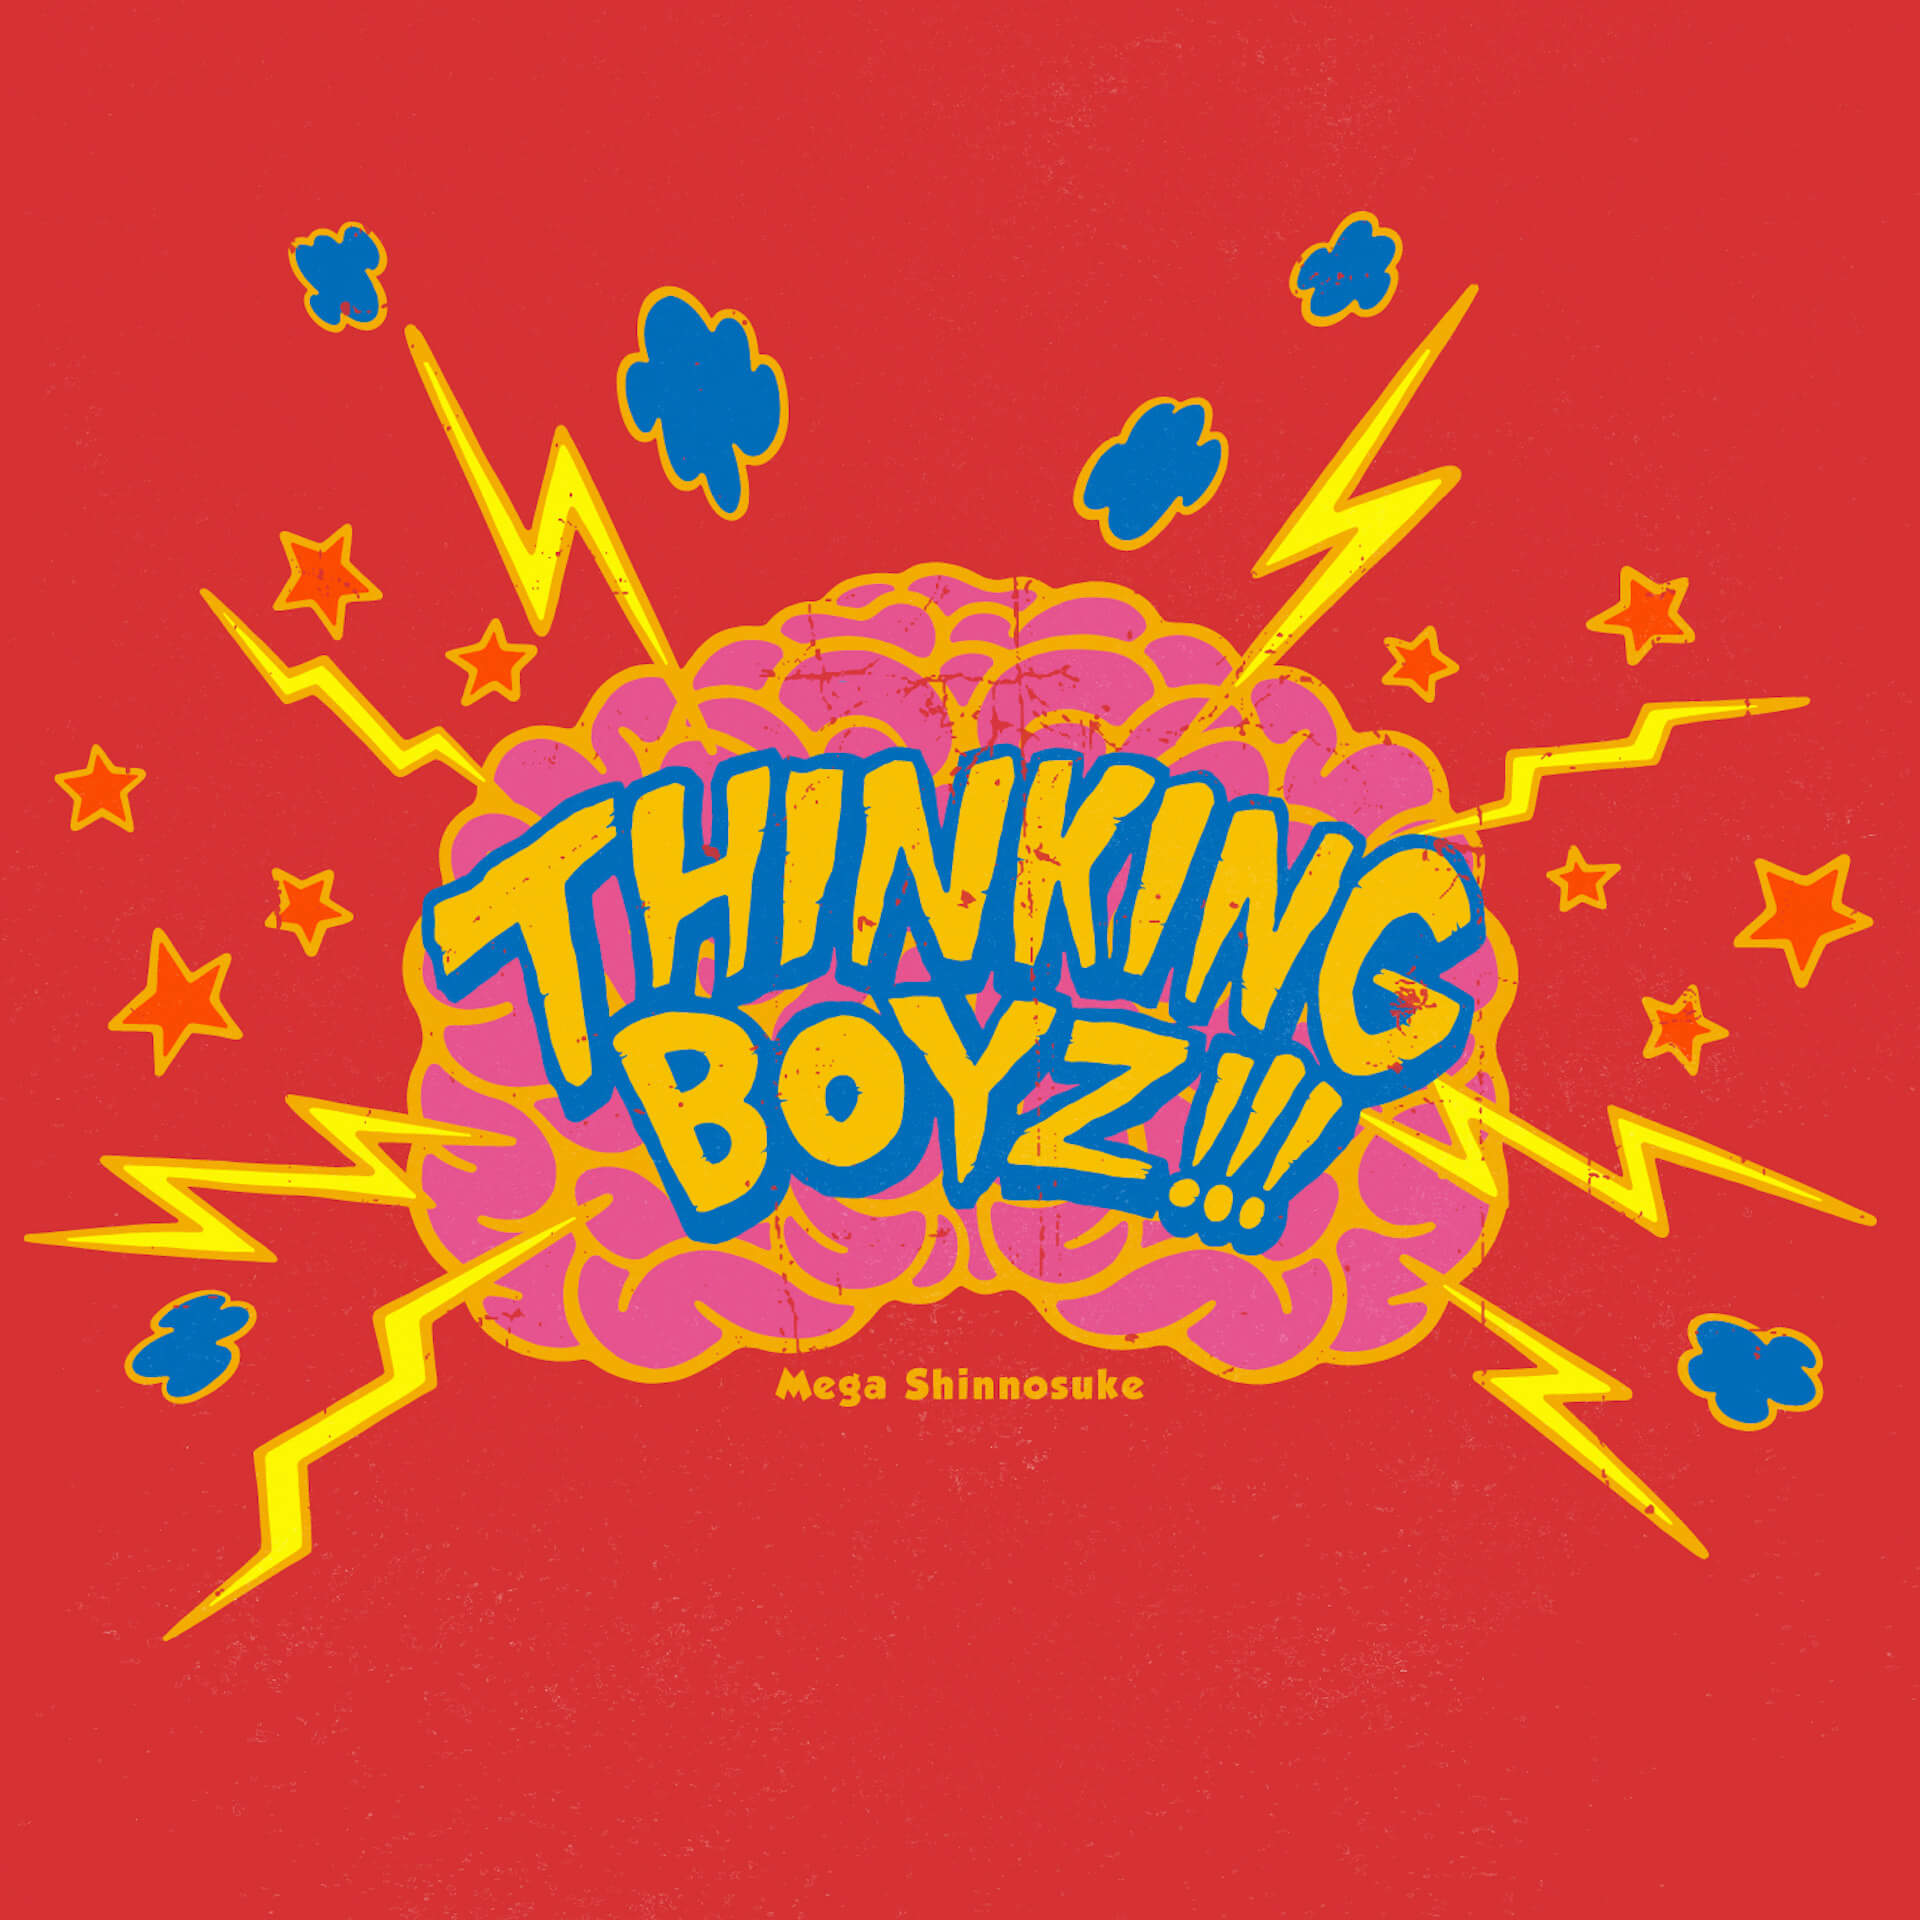 Mega Shinnosukeの新曲“Thinking Boyz！！！”が本日配信リリース！ディレクターISSEIとのコラボMVも公開 music210604_mega_TB3